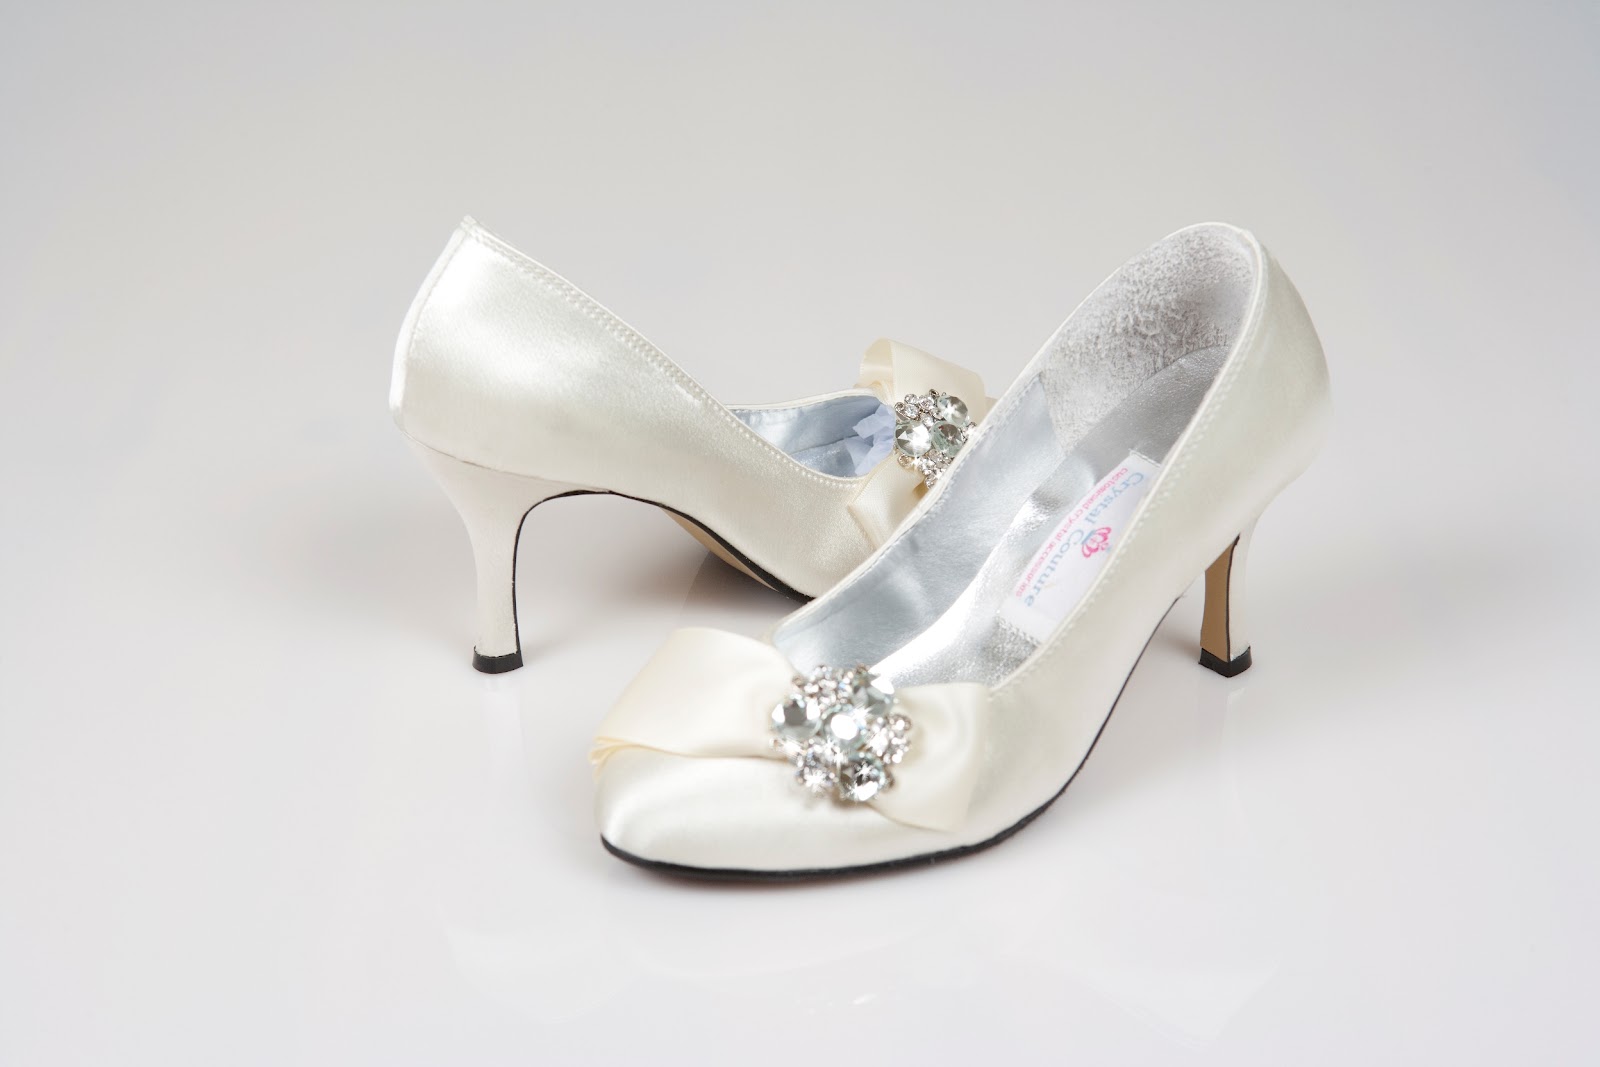 Bridal Shoes - Wales, UK: Welcome to Bridal Shoes Wales, UK, United Kingdom